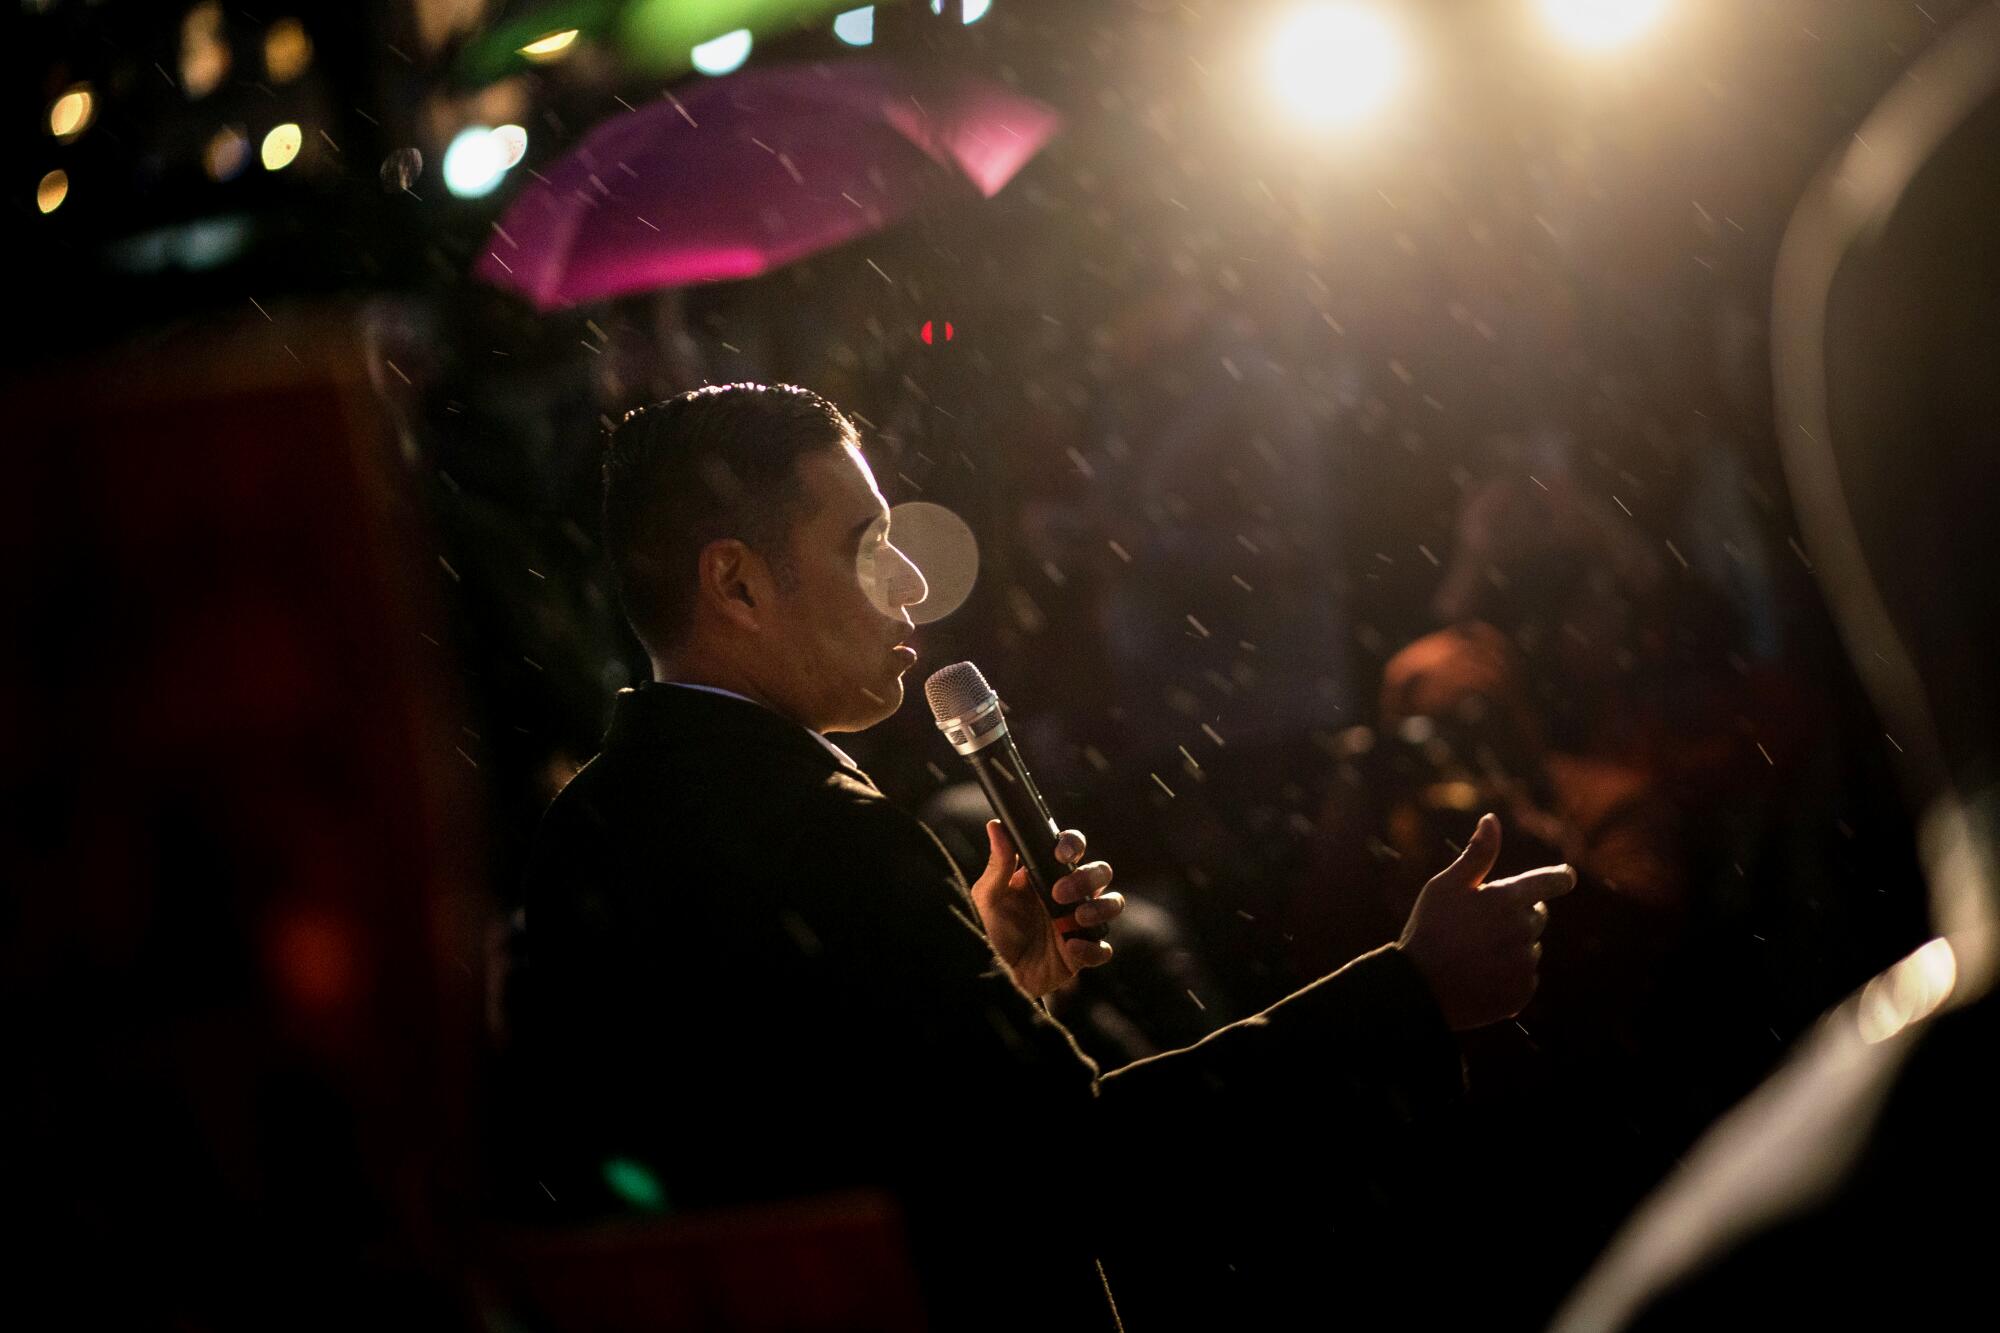 Robert Garcia talks into a microphone outside at night as rain falls